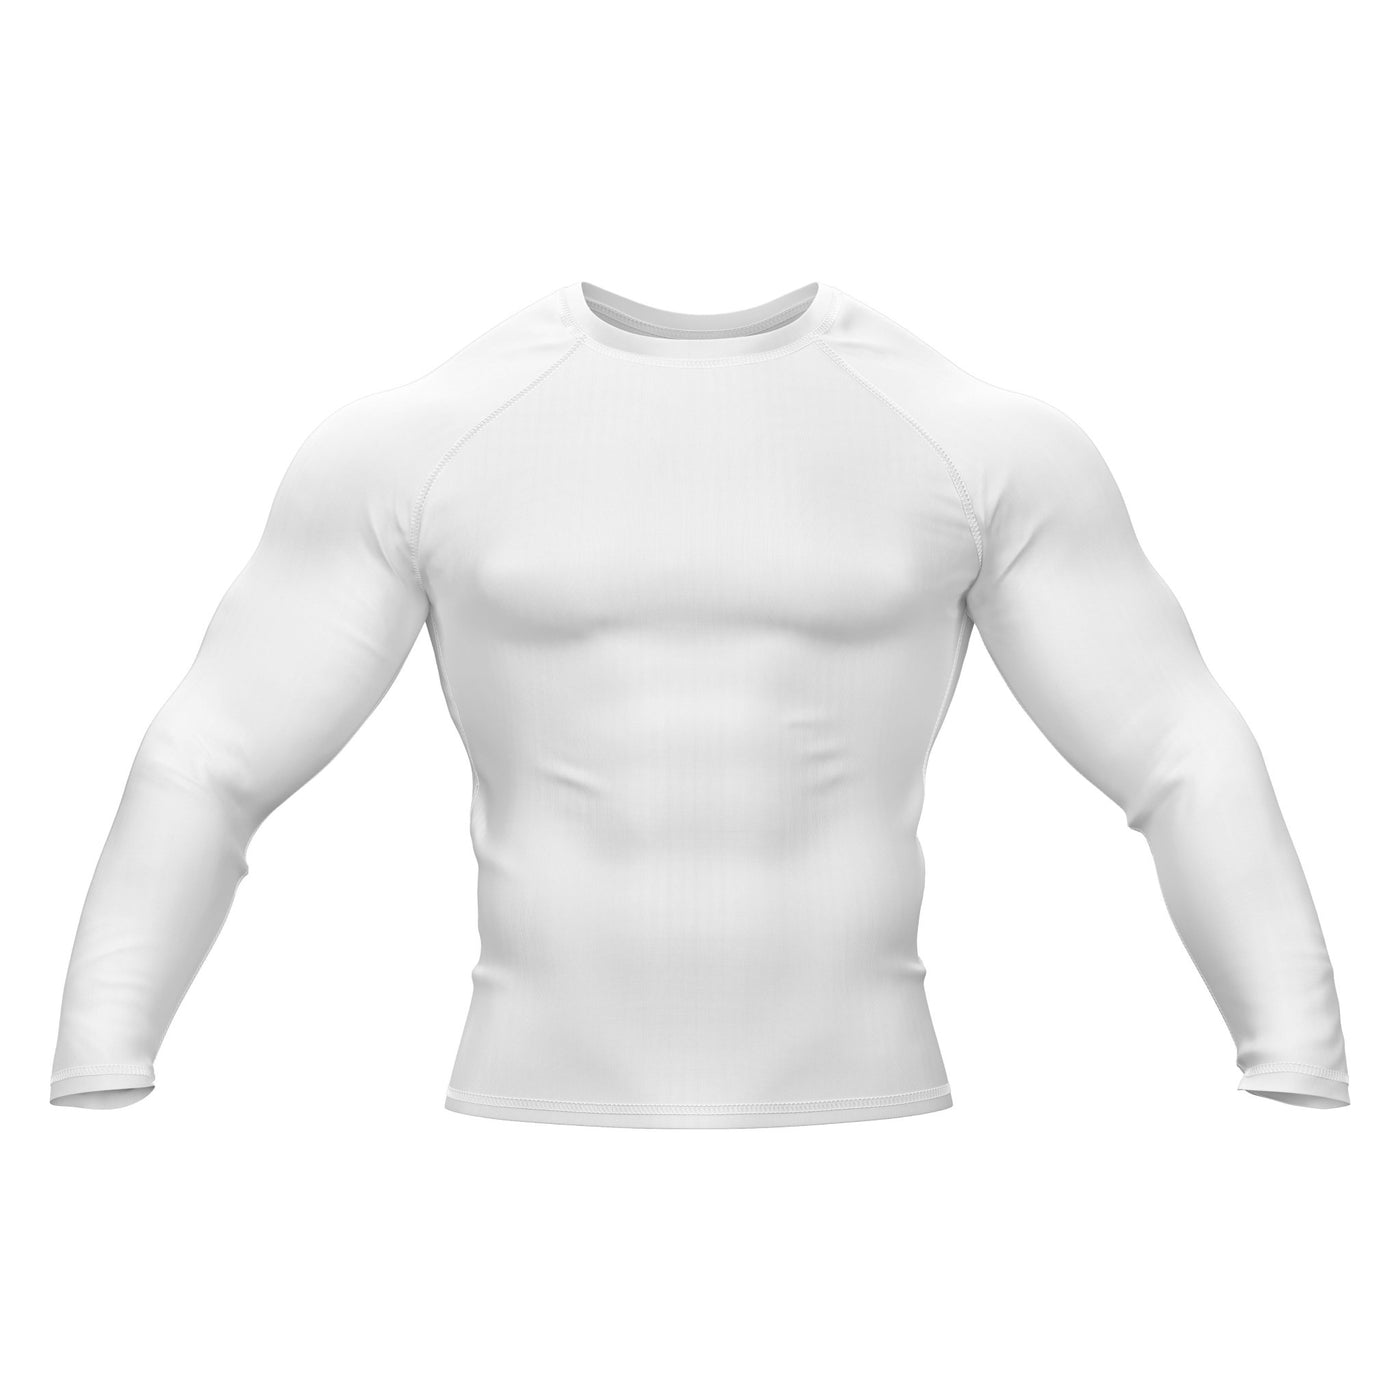 White with White Sleeves Ranked Rashguard - Summo Sports